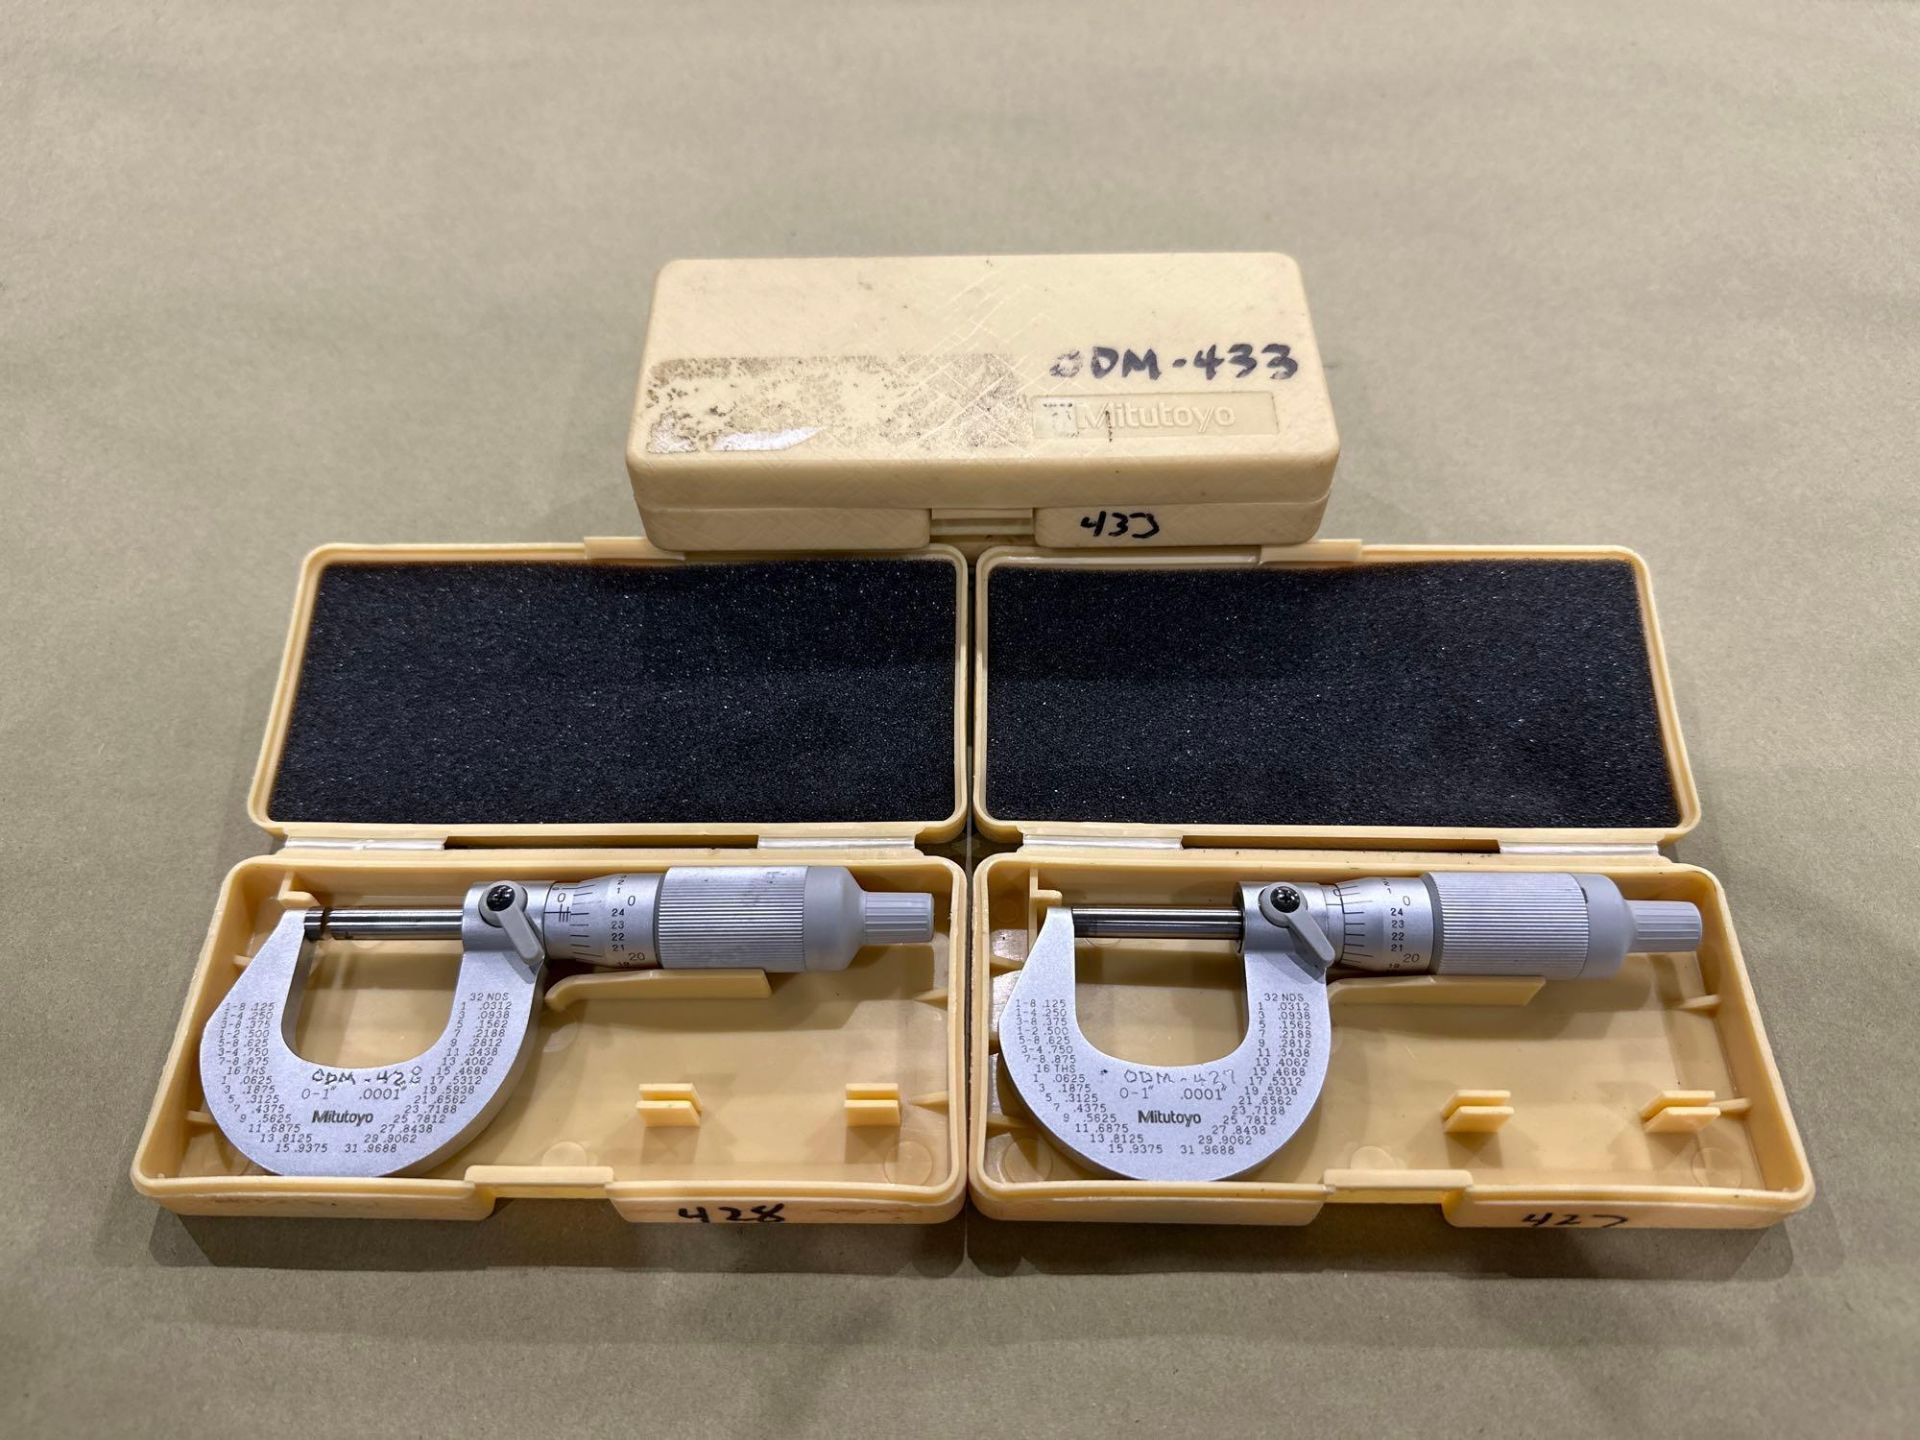 Lot of 4: Mitutoyo Mechanical OD Micrometer M227-1”, 0-1” Range, .0001” Graduation, in plastic box